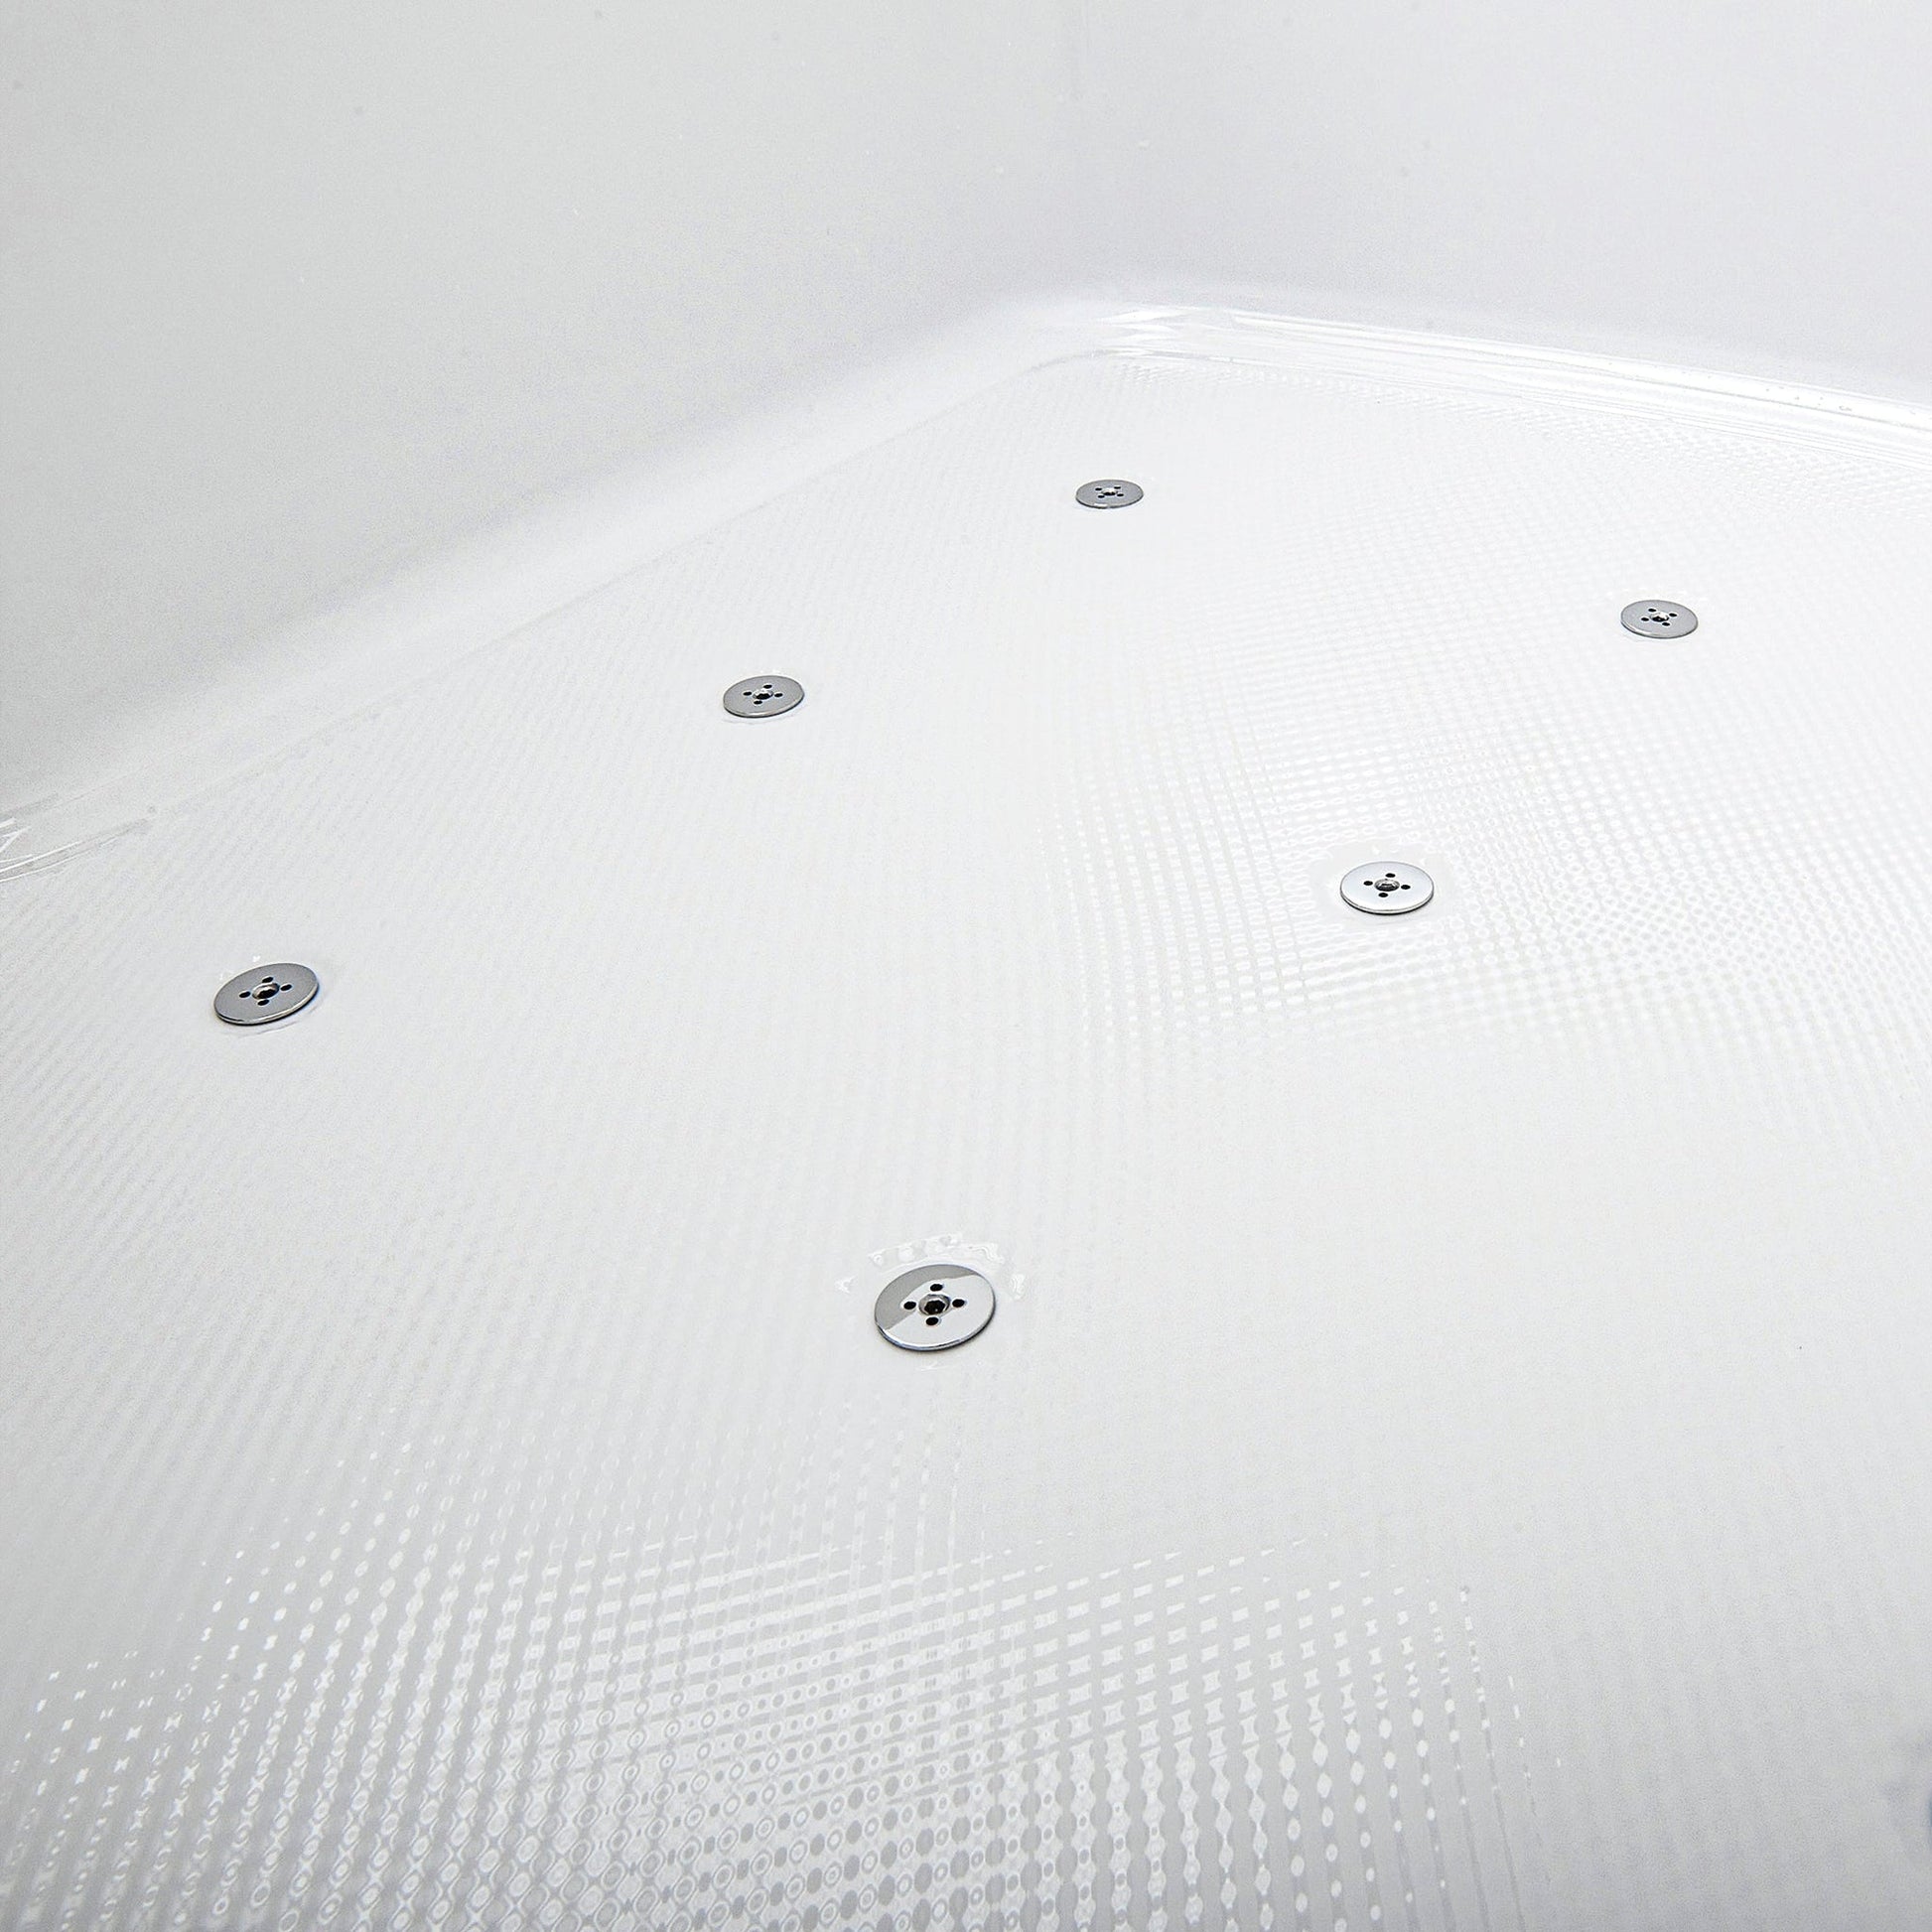 Ella's Bubbles Laydown 30" x 60" White Acrylic Air Massage Walk-In Bathtub With Left Inward Swing Door